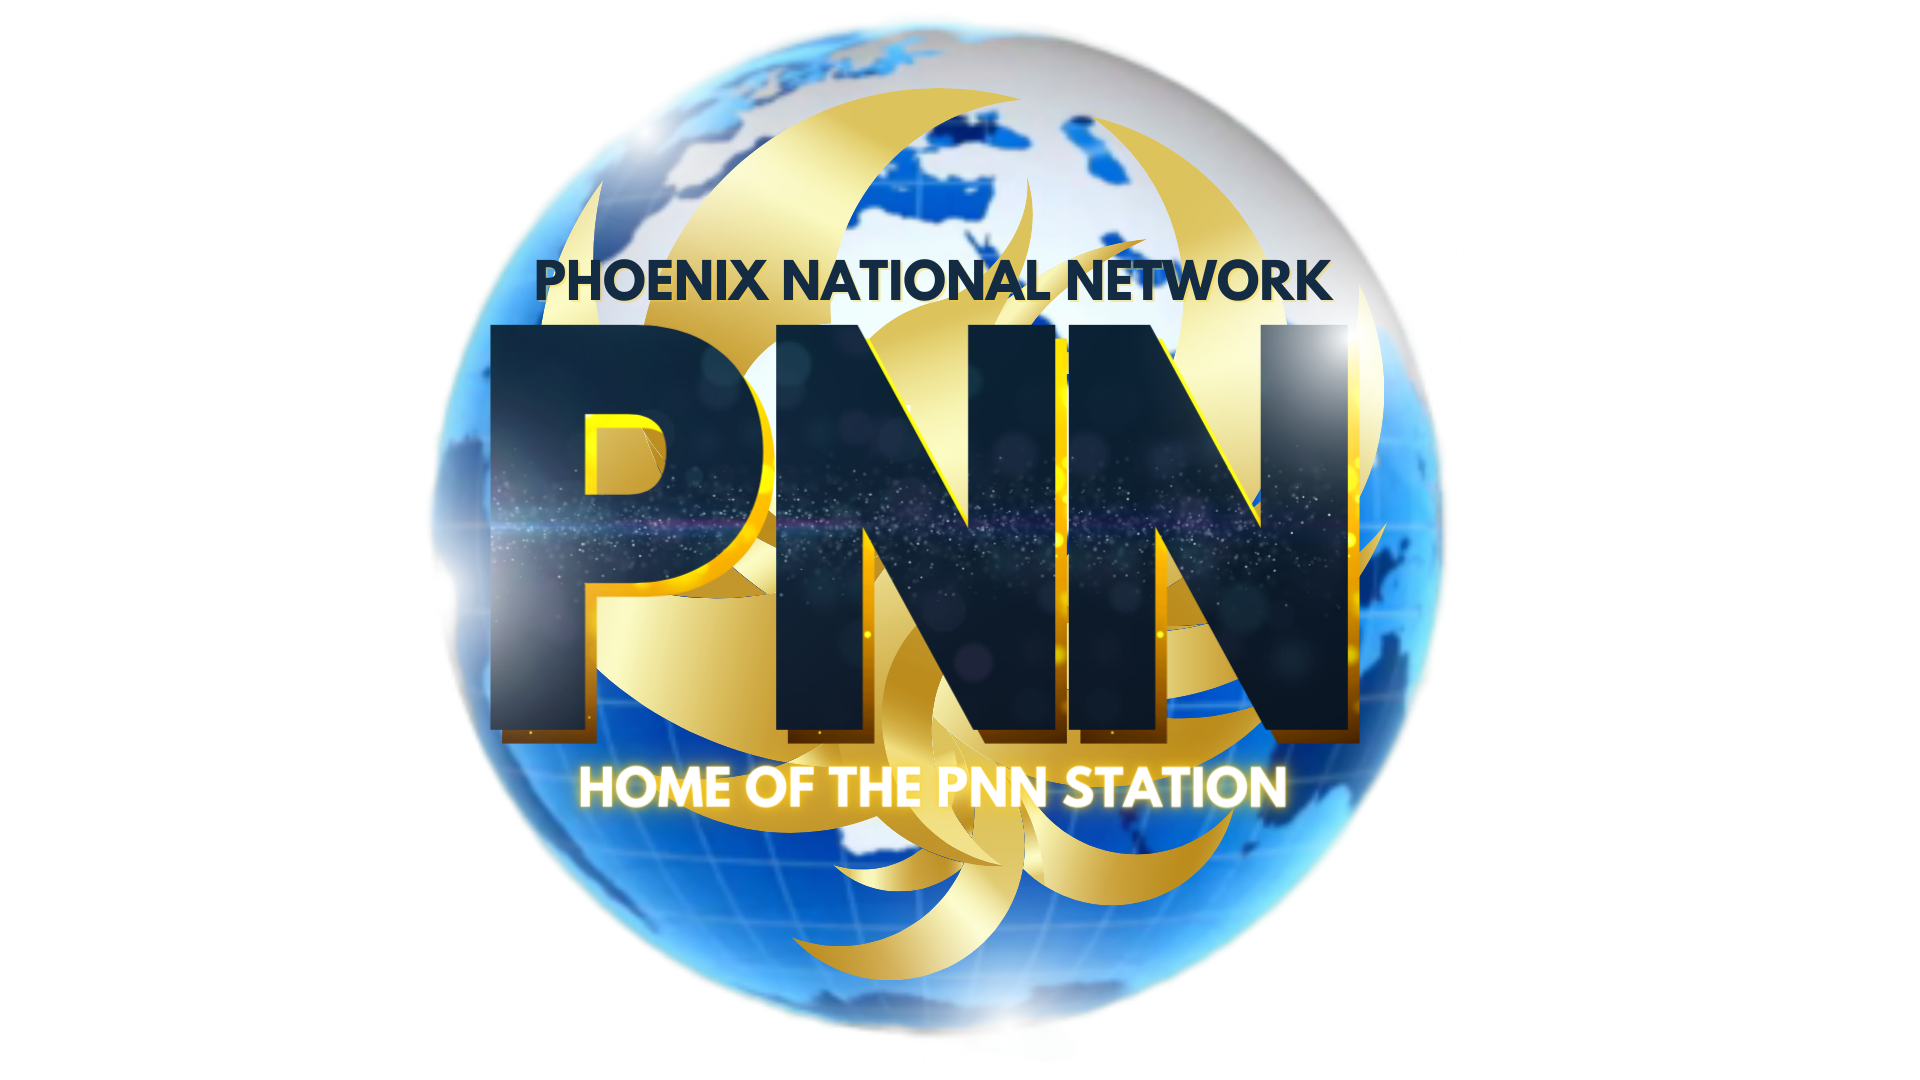 Phoenix National Network